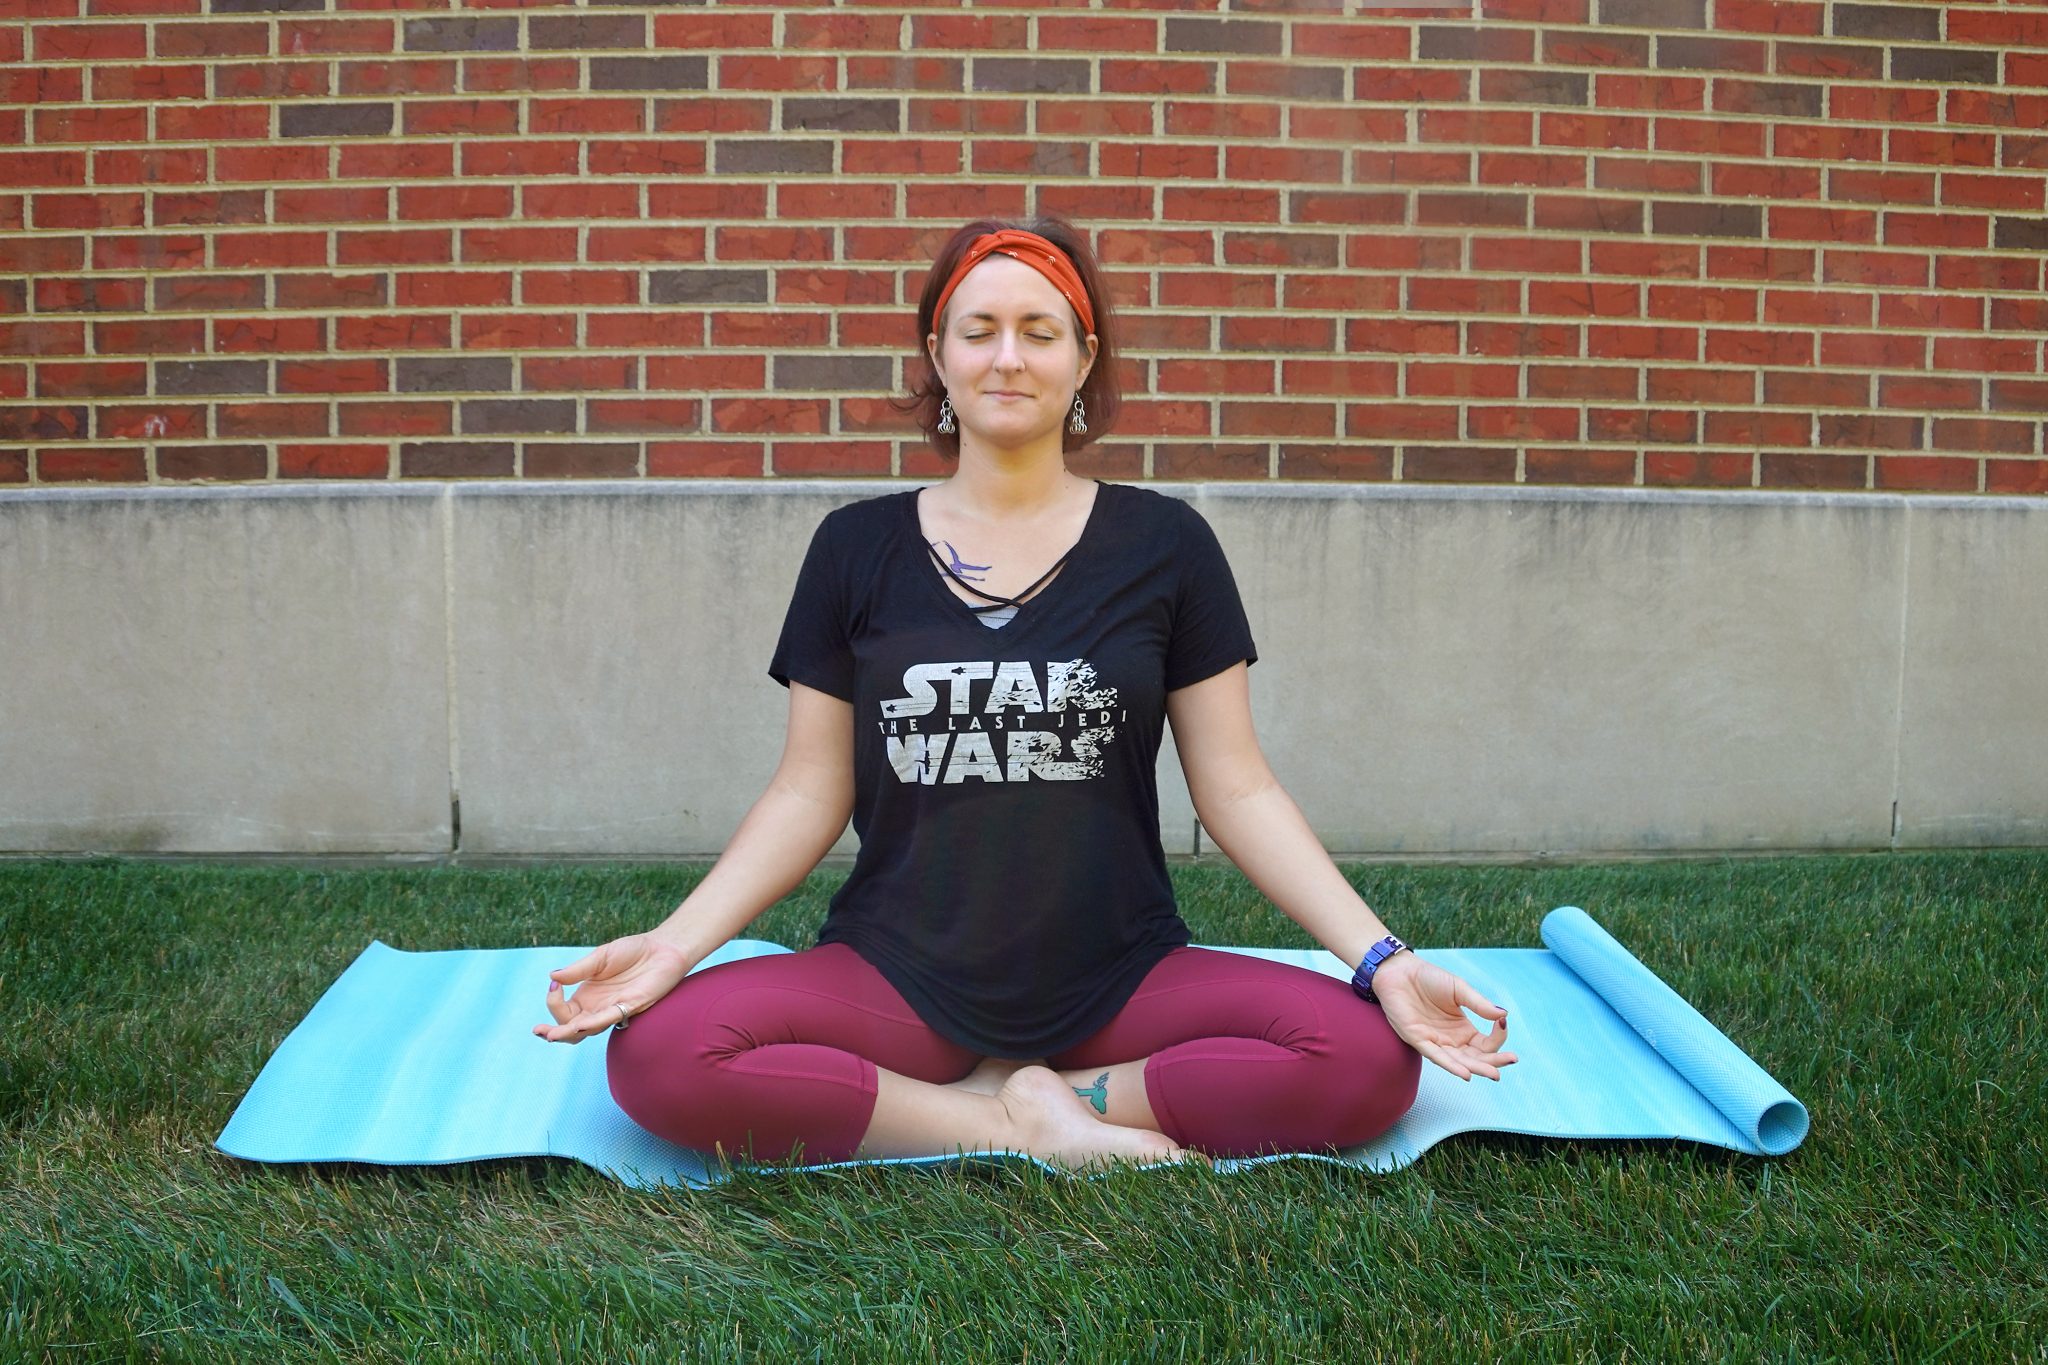 Yoga & Mindfulness